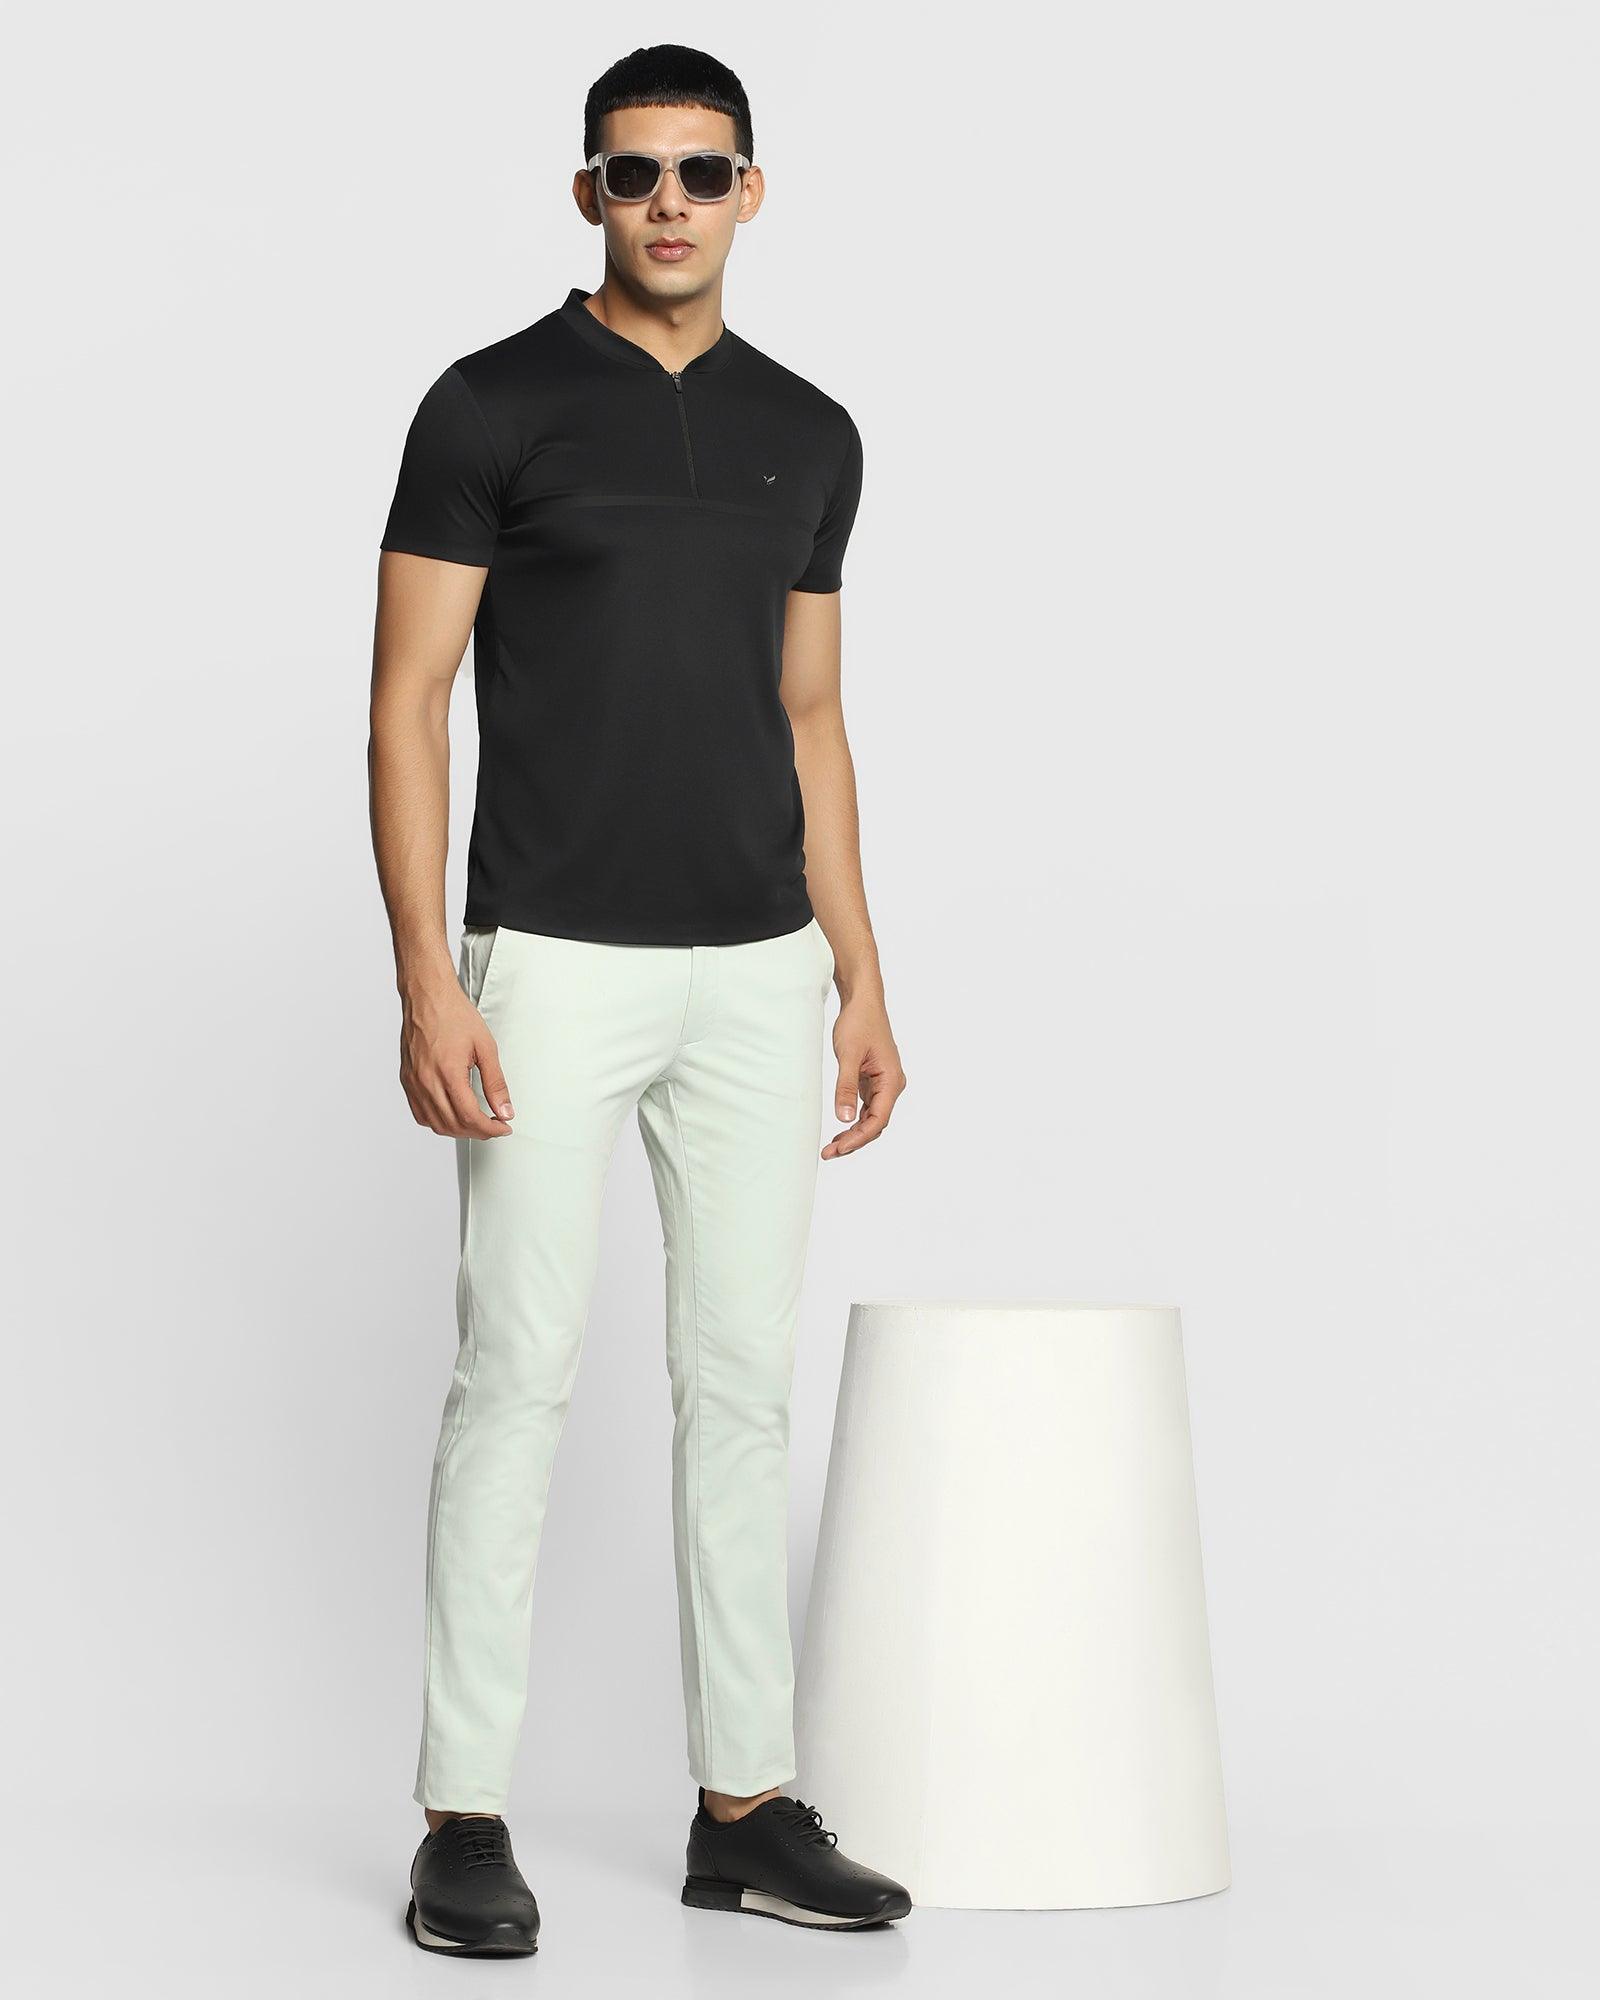 Stripe sleeve Jacket and Pants set - Black (Offer - Free White Crop T shirt)  - Nachke Dance fashion